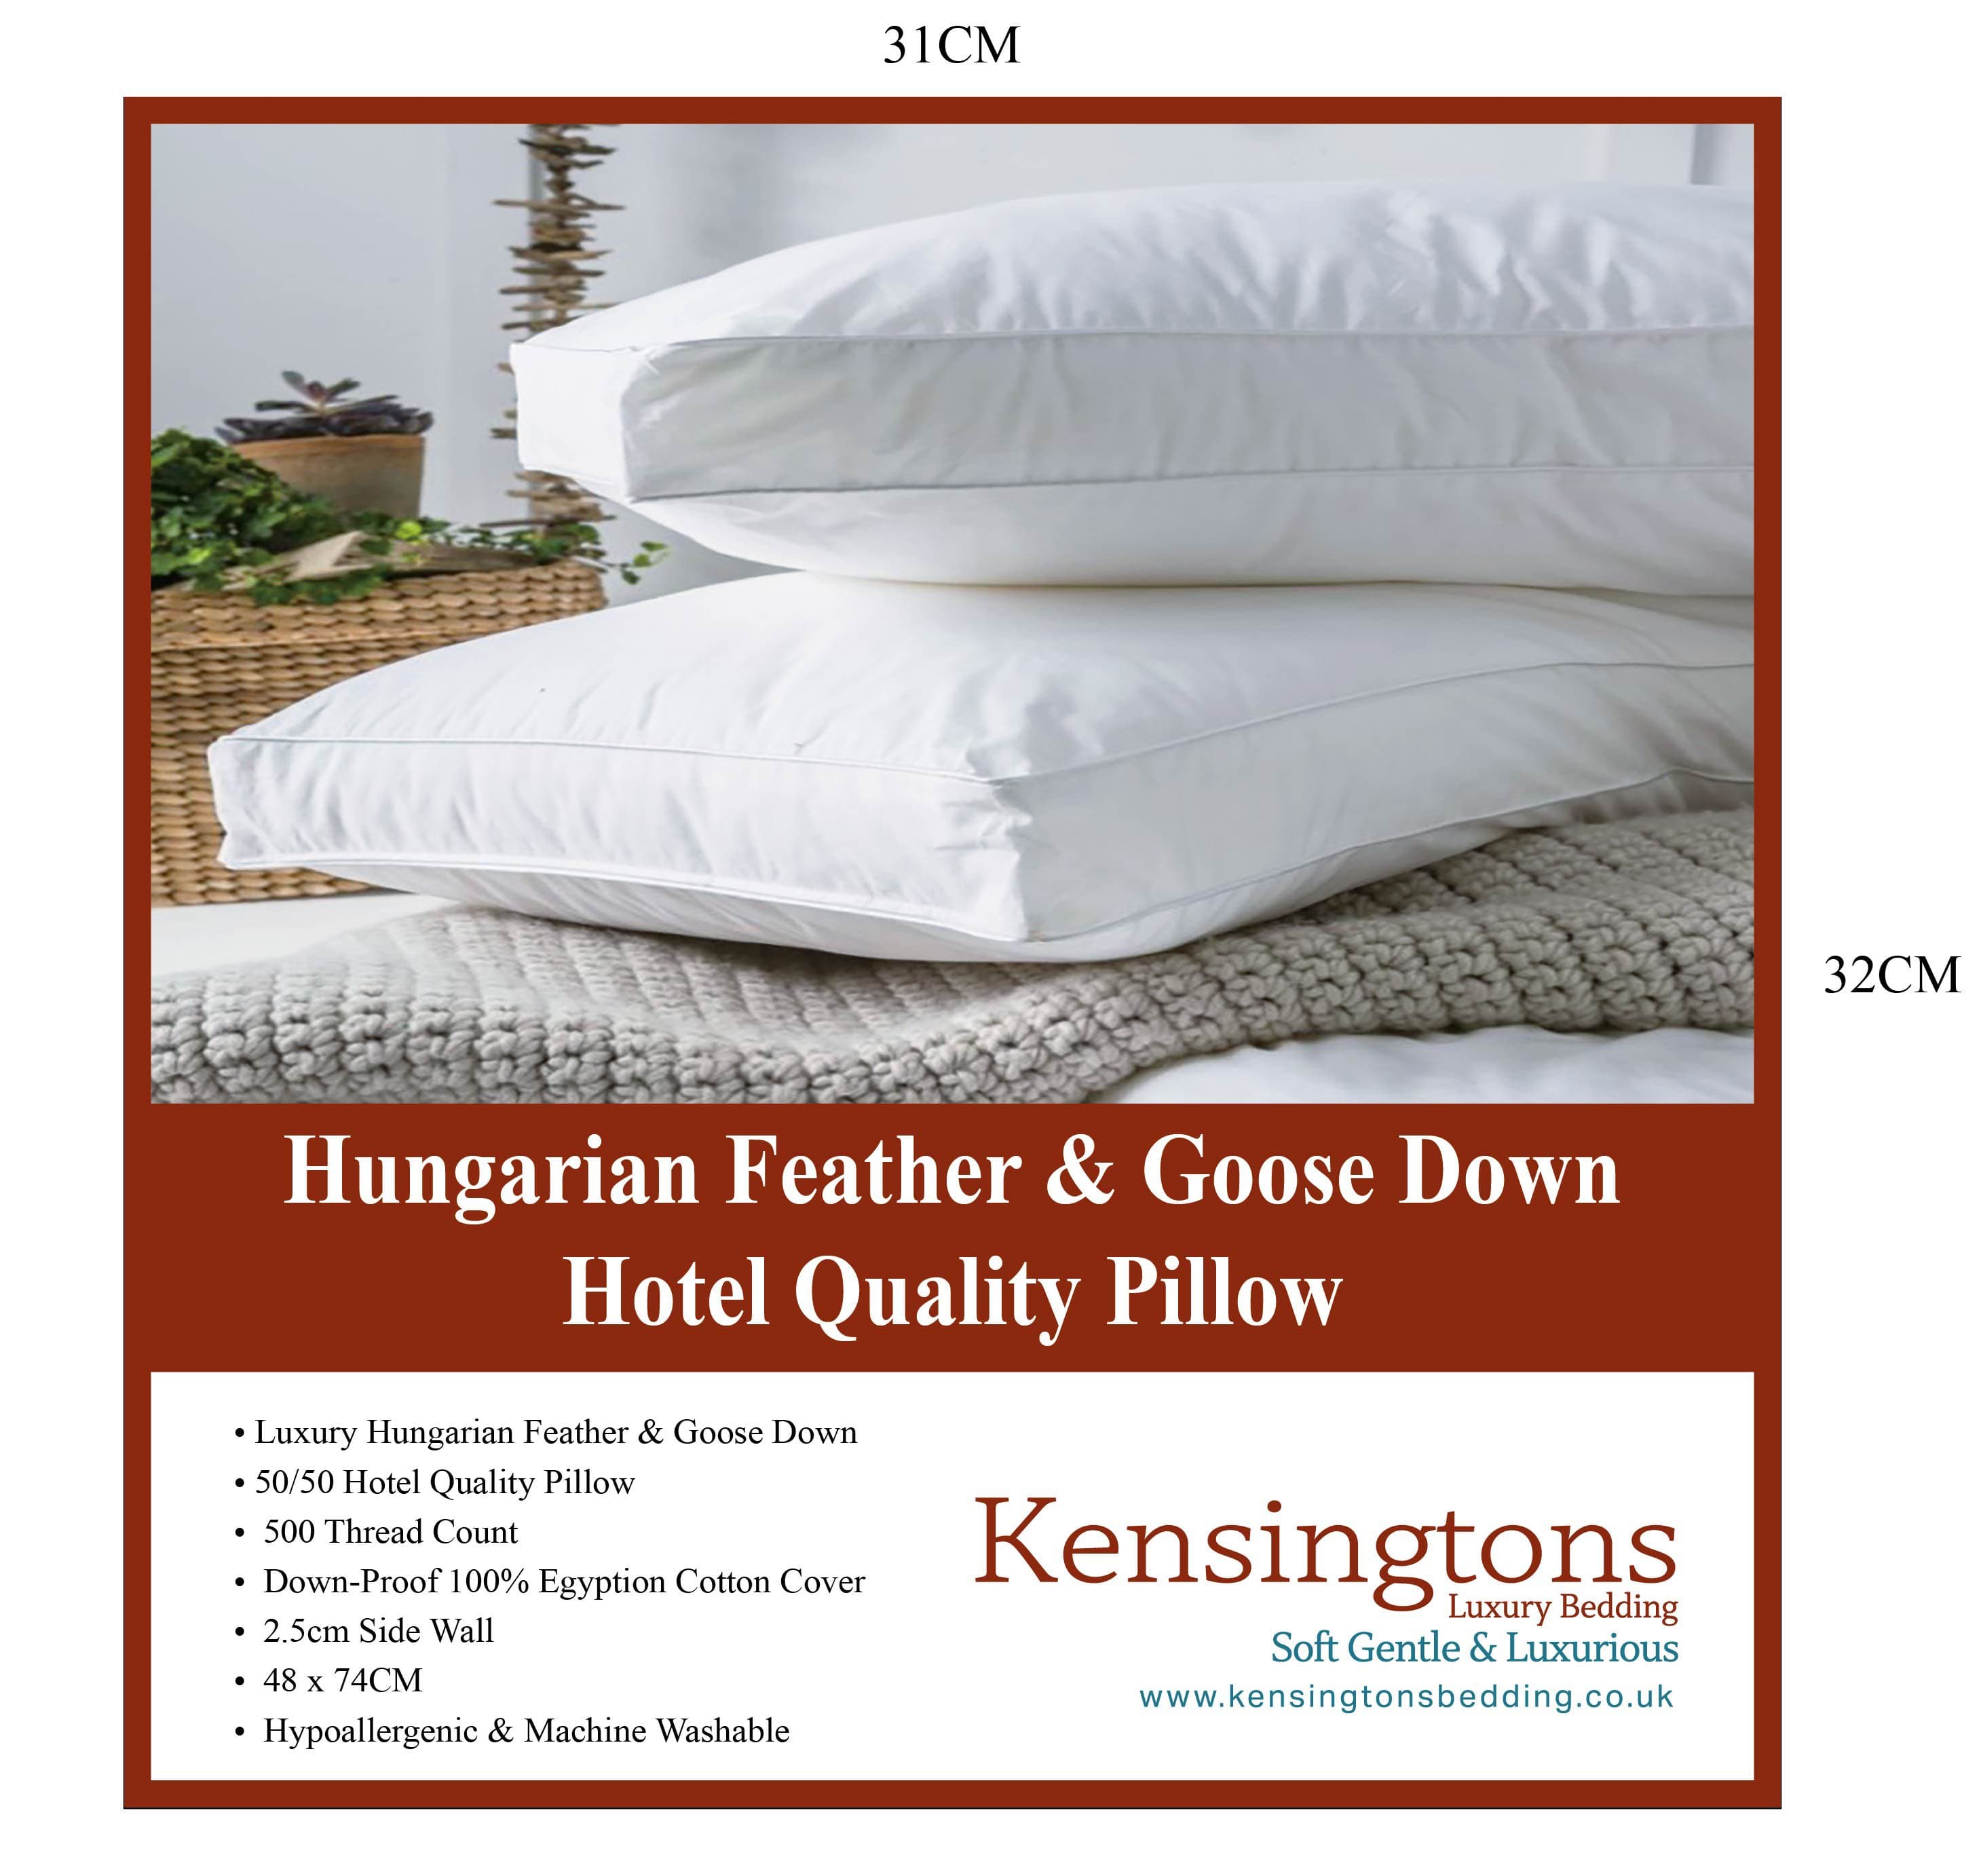 Experience-Comfort-with-Kensingtons-50/50-Pillows